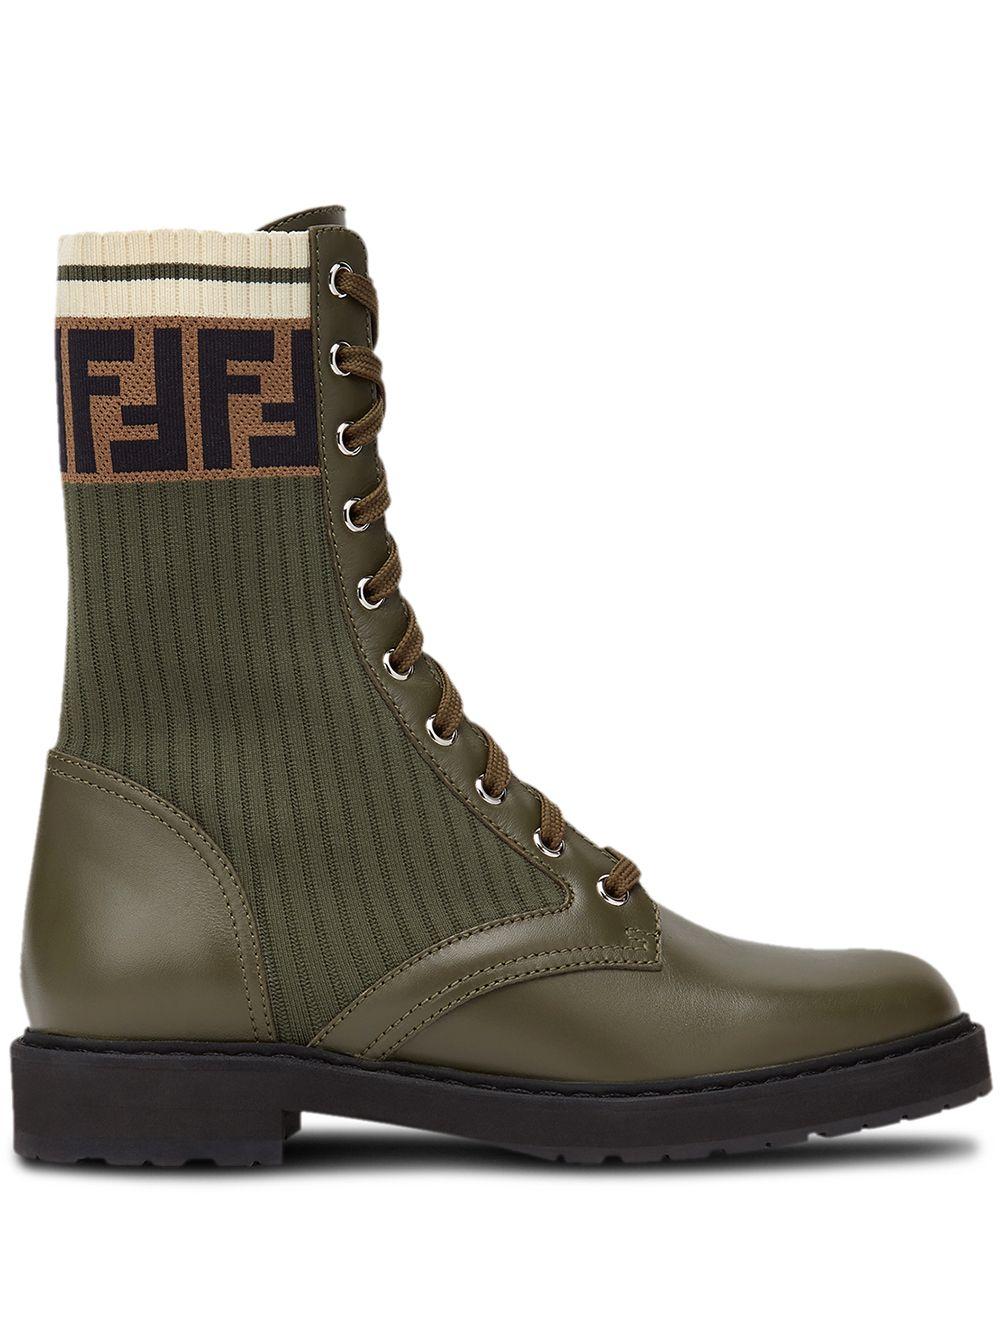 Fendi Rockoko Combat Boots in Green - Save 5% | Lyst